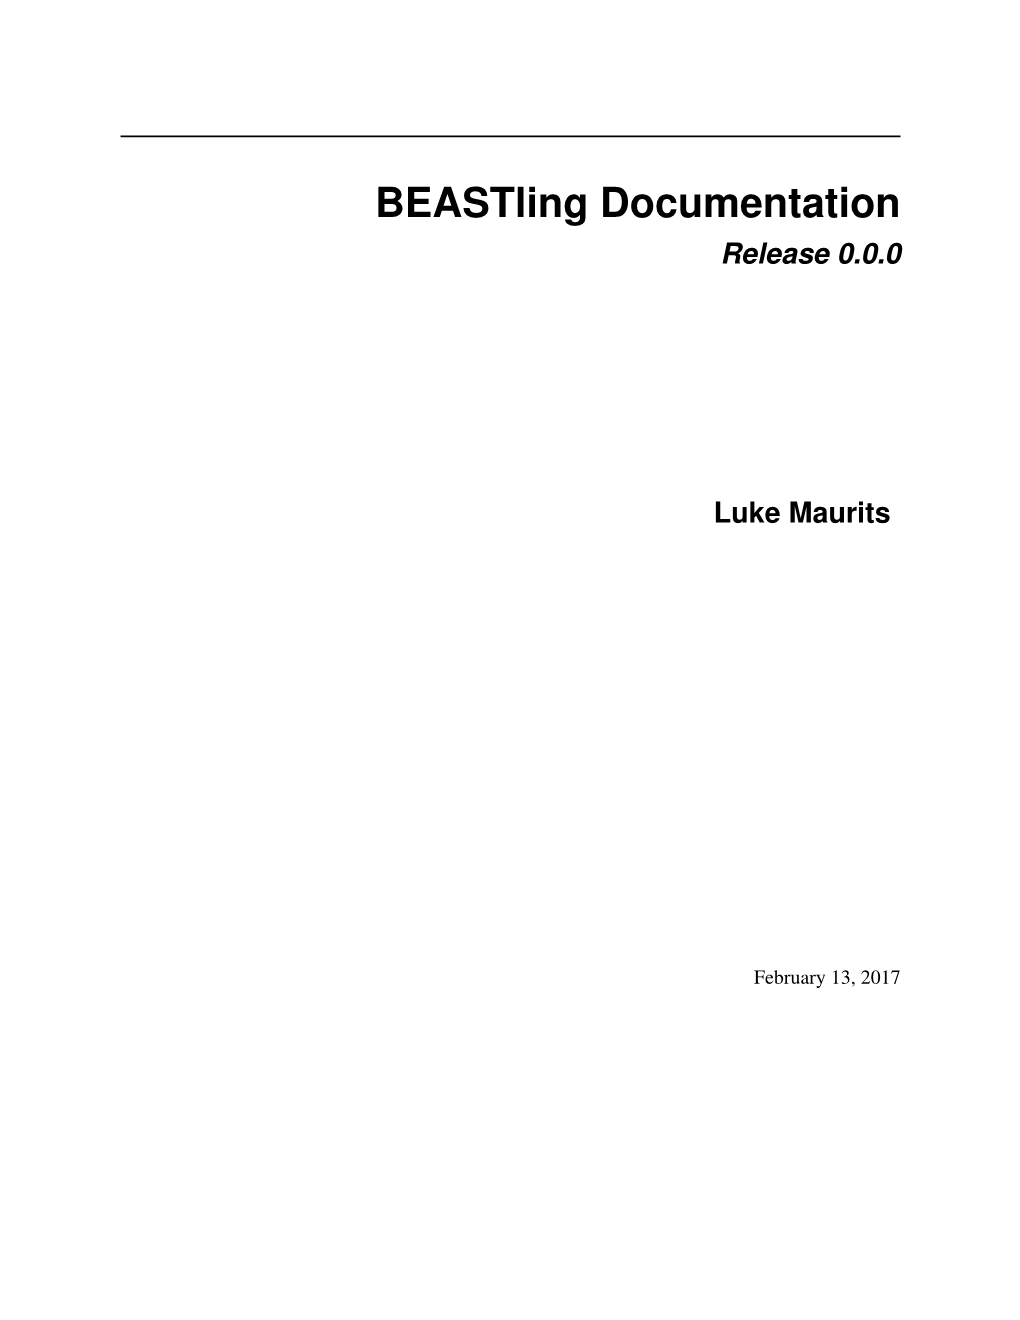 Beastling Documentation Release 0.0.0